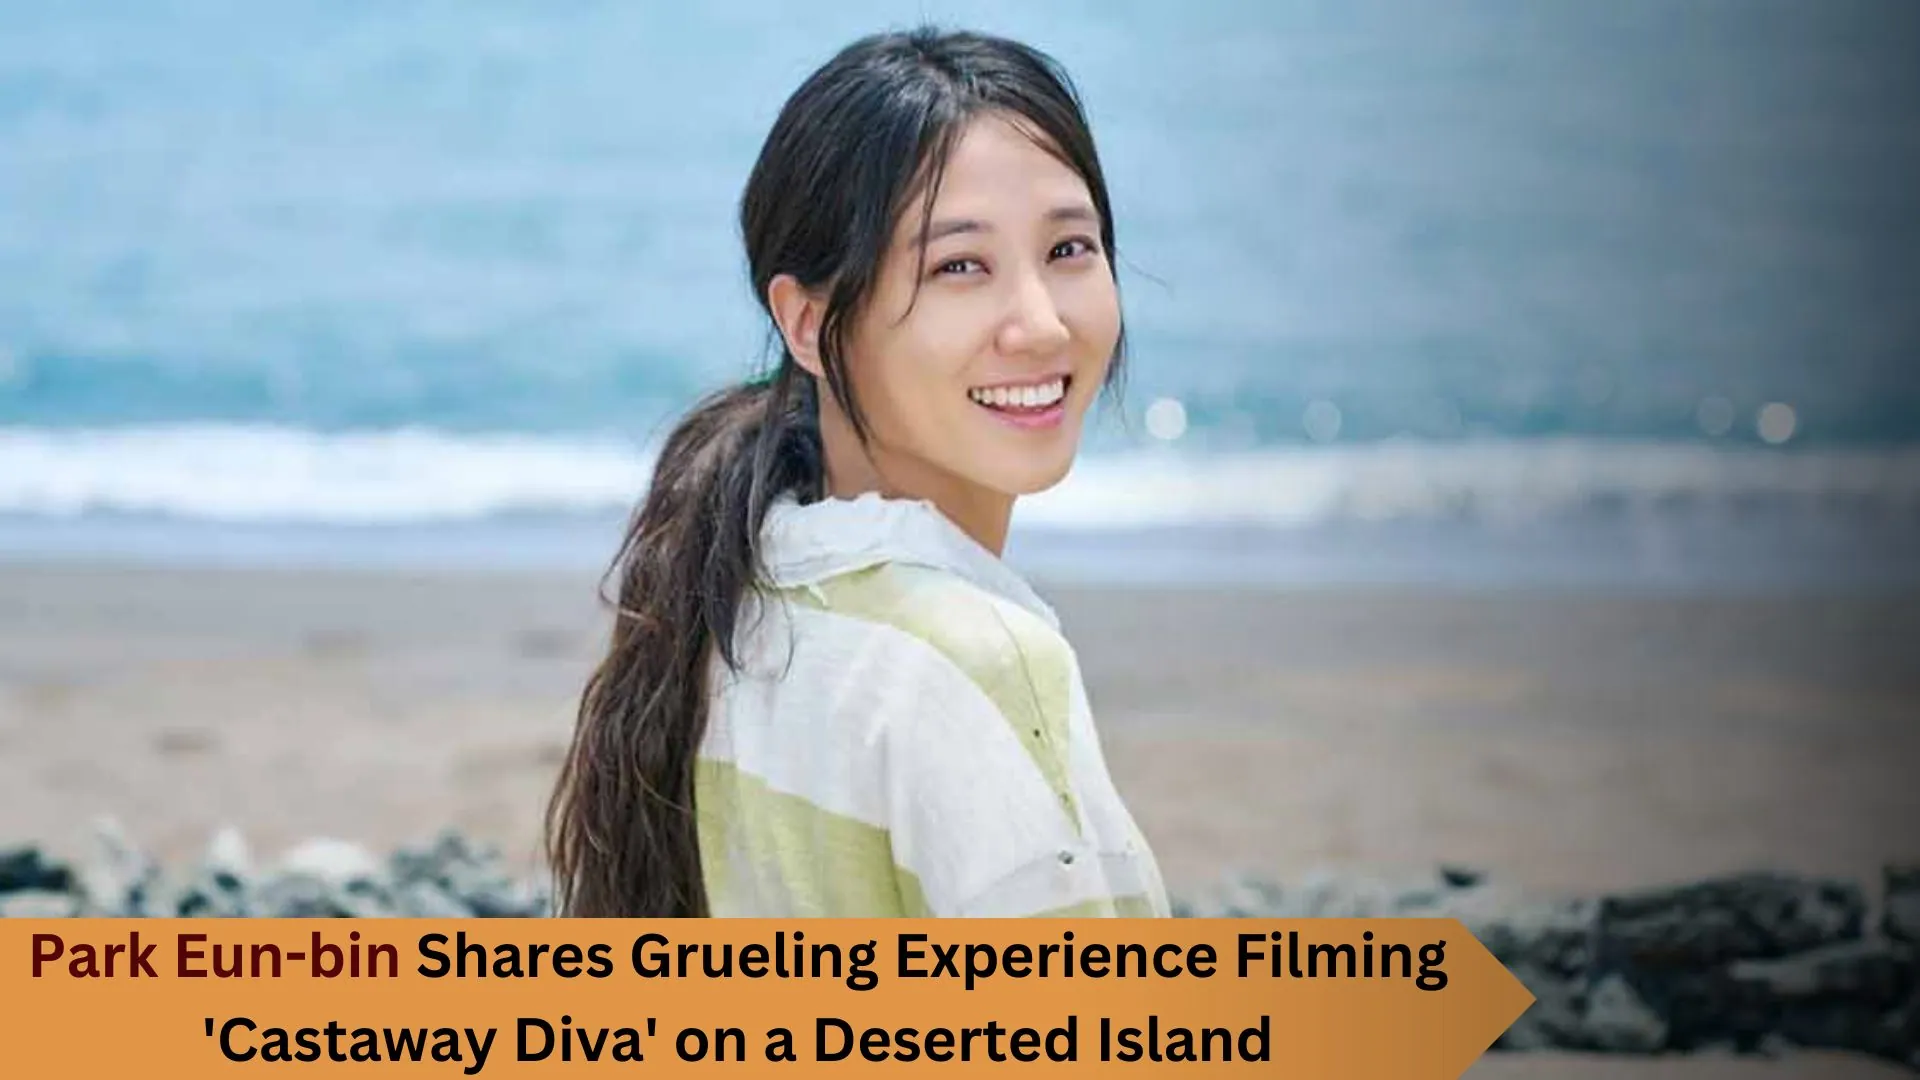 Park Eun-bin Shares Grueling Experience Filming 'Castaway Diva' on a Deserted Island